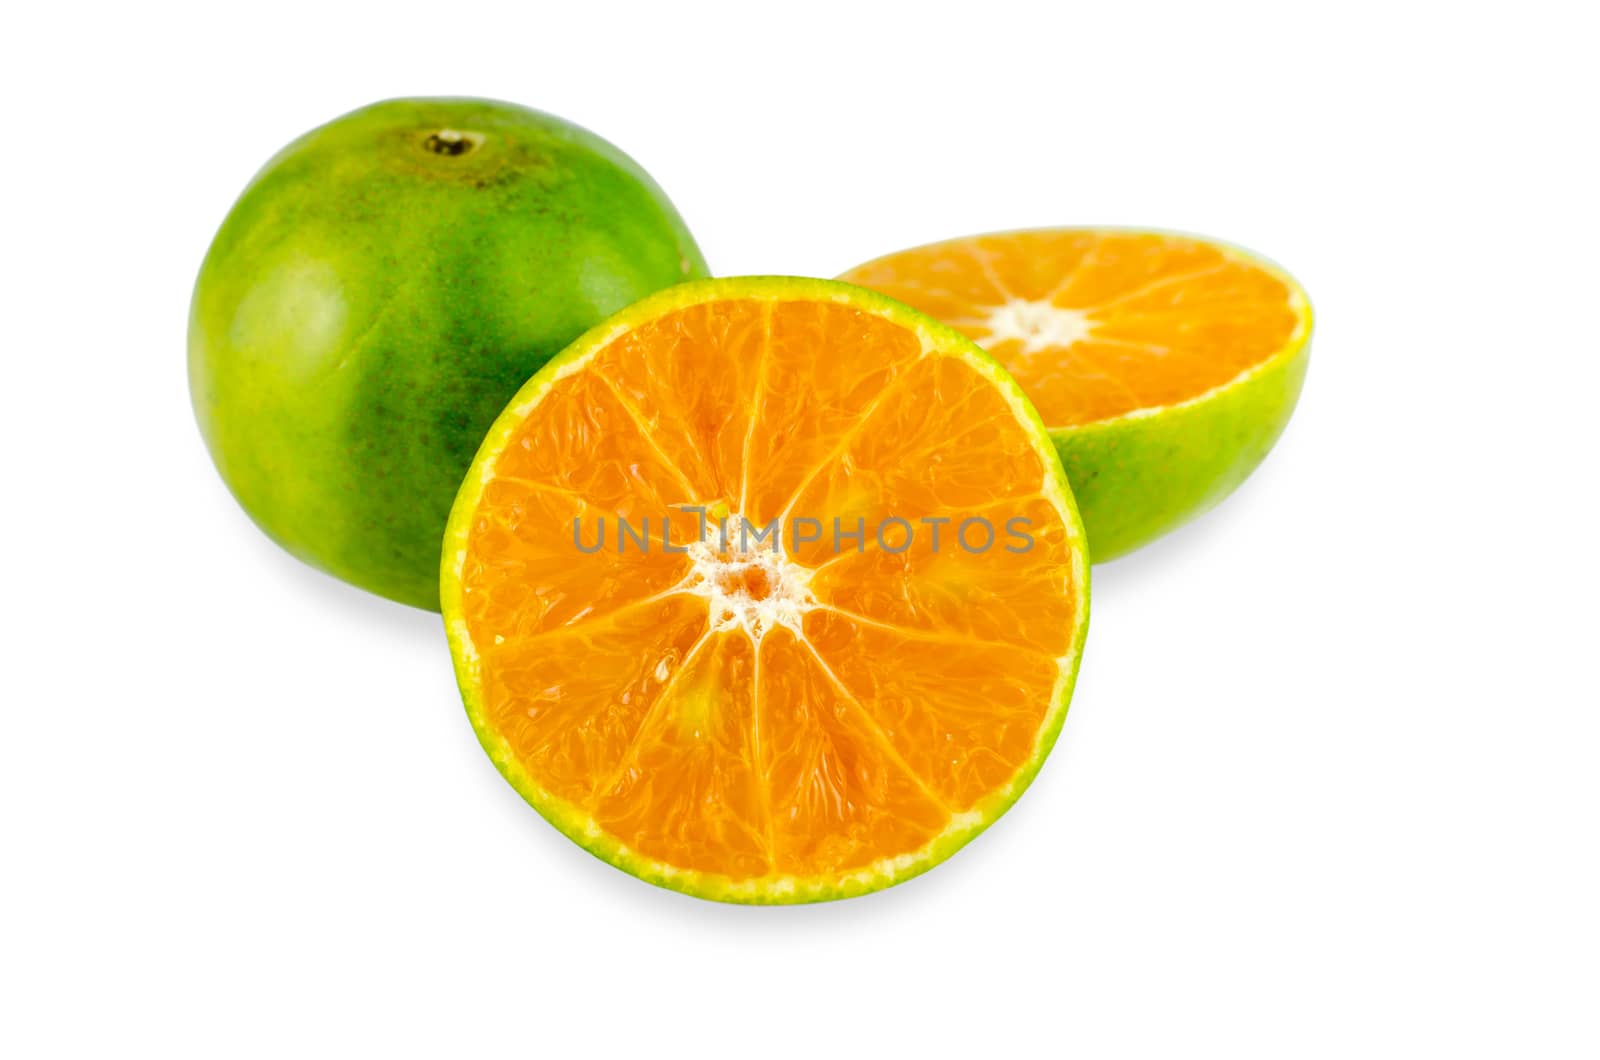 mandarin orange,Tangerines, sweet green thai mandarin orange,Tangerines, sweet green thai on white background.